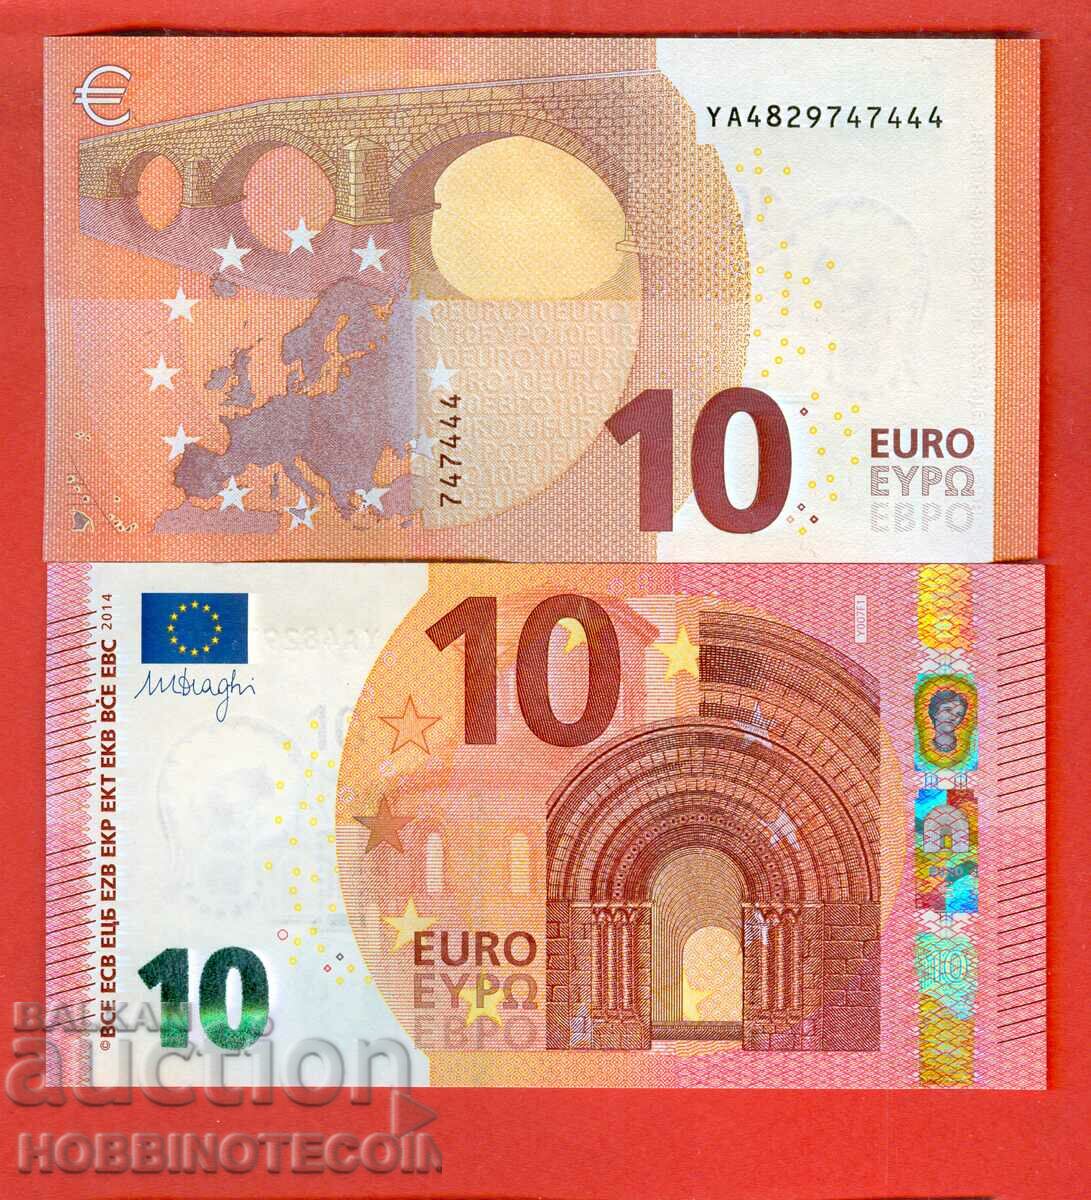 EUROPE EUROPA 10 Euro issue issue 2014 - YA - NEW UNC